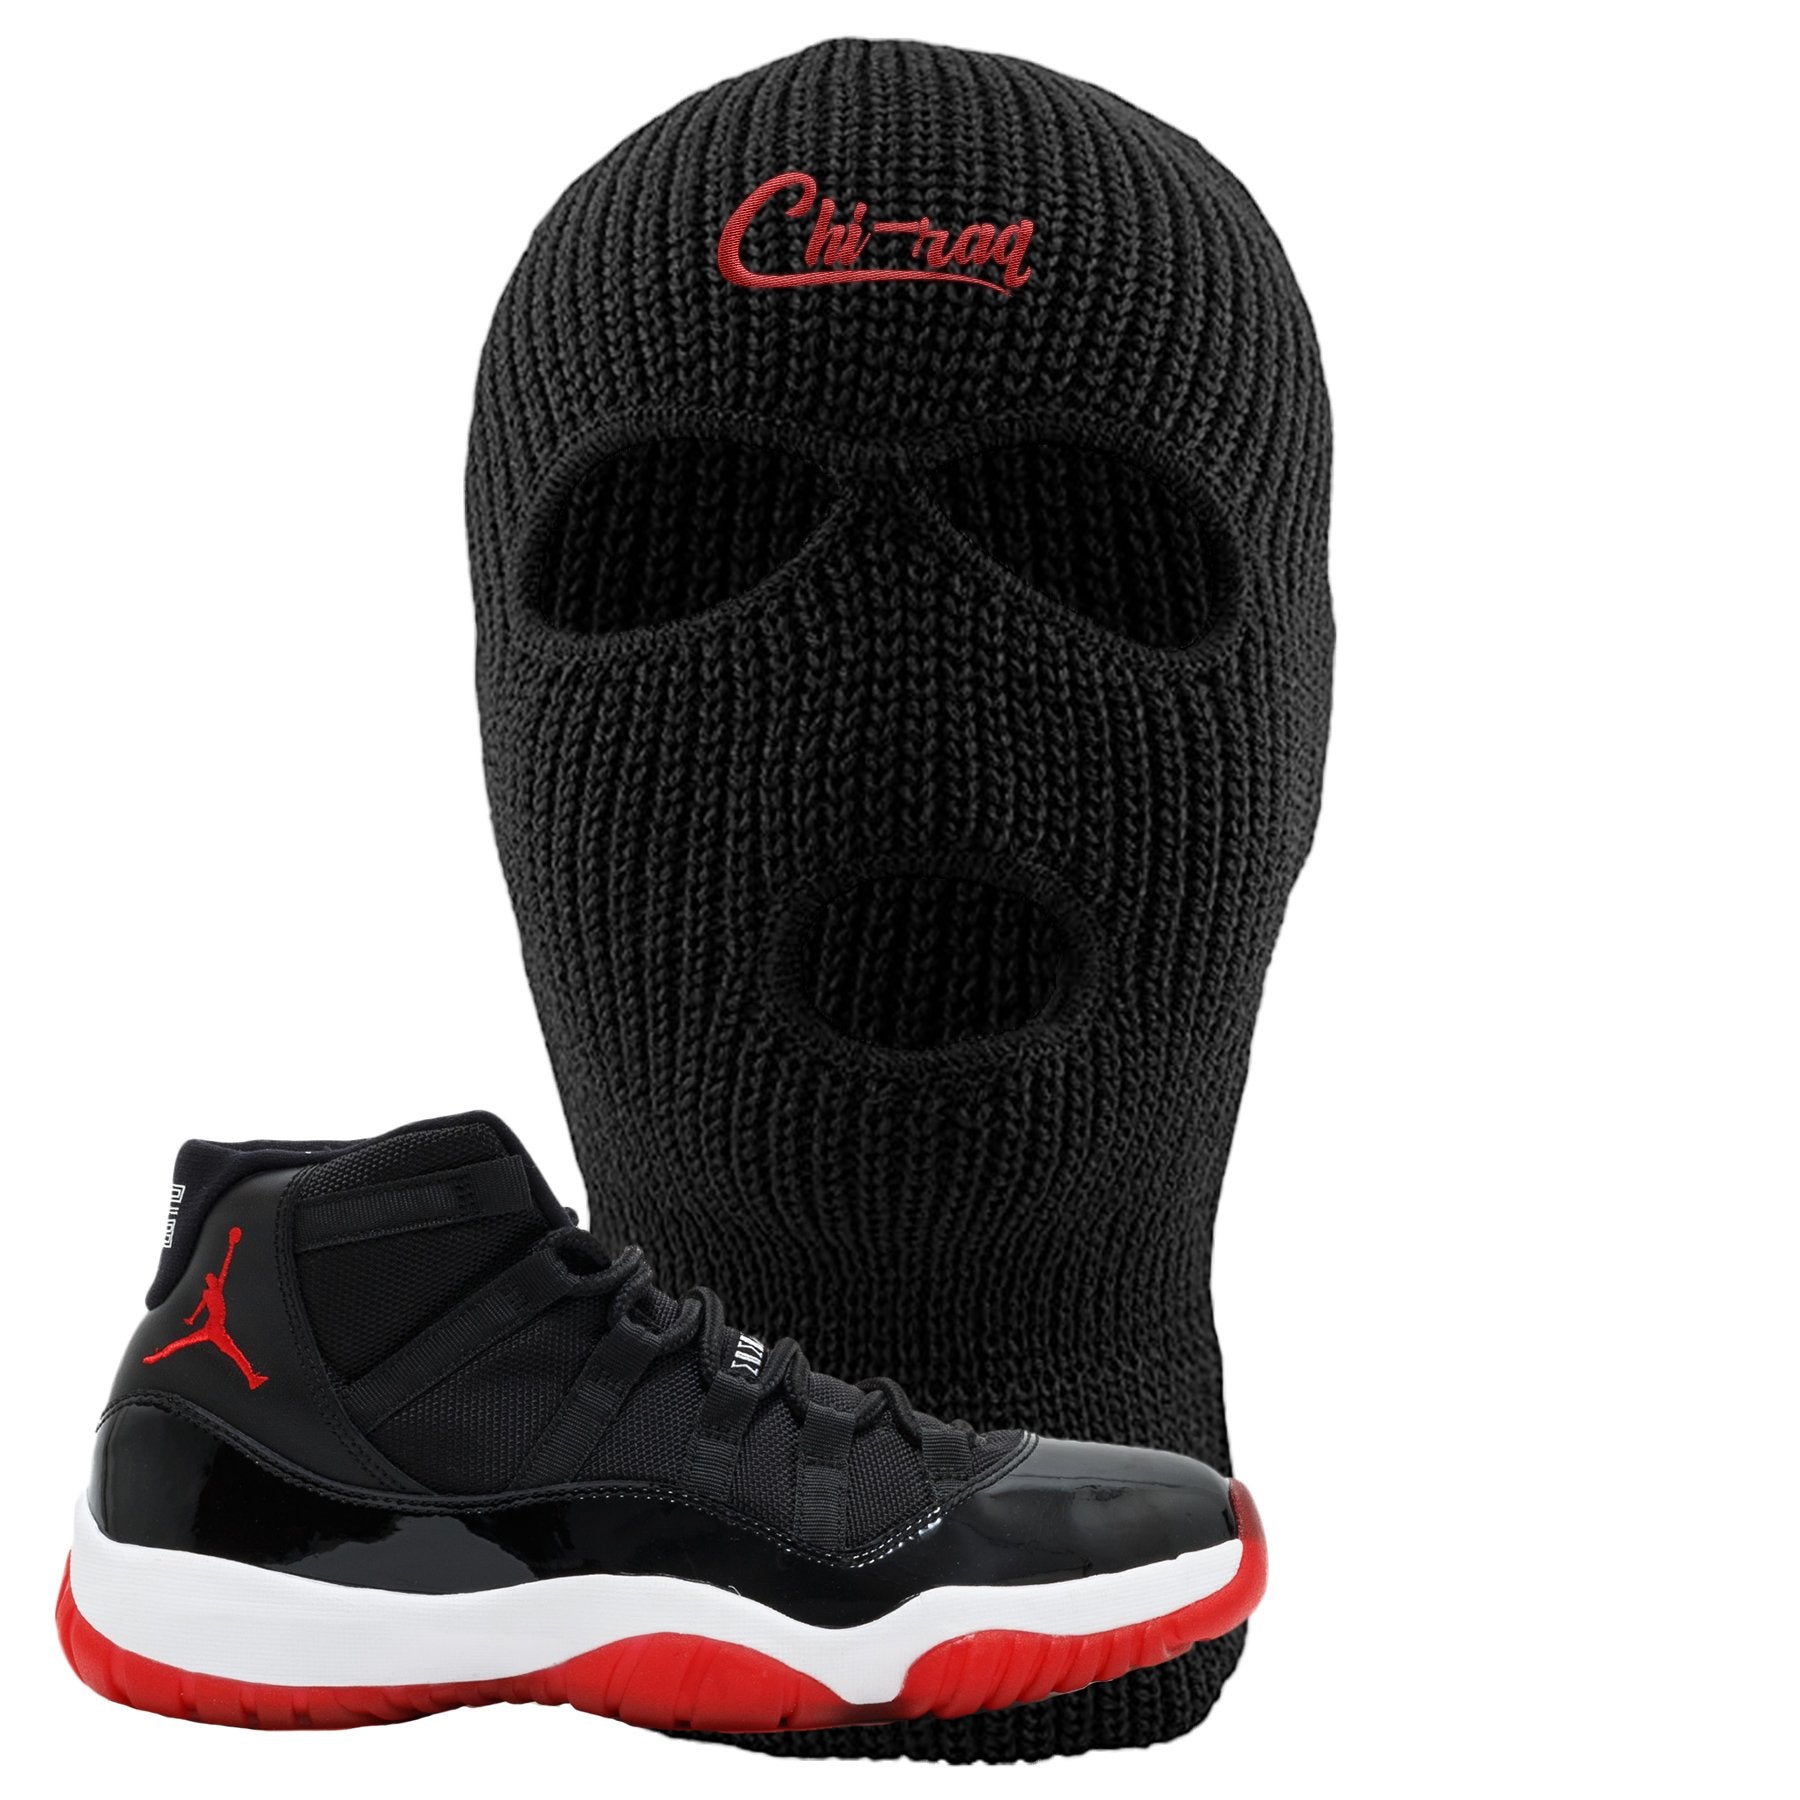 Jordan 11 Bred Chi-raq Black Sneaker Hook Up Ski Mask